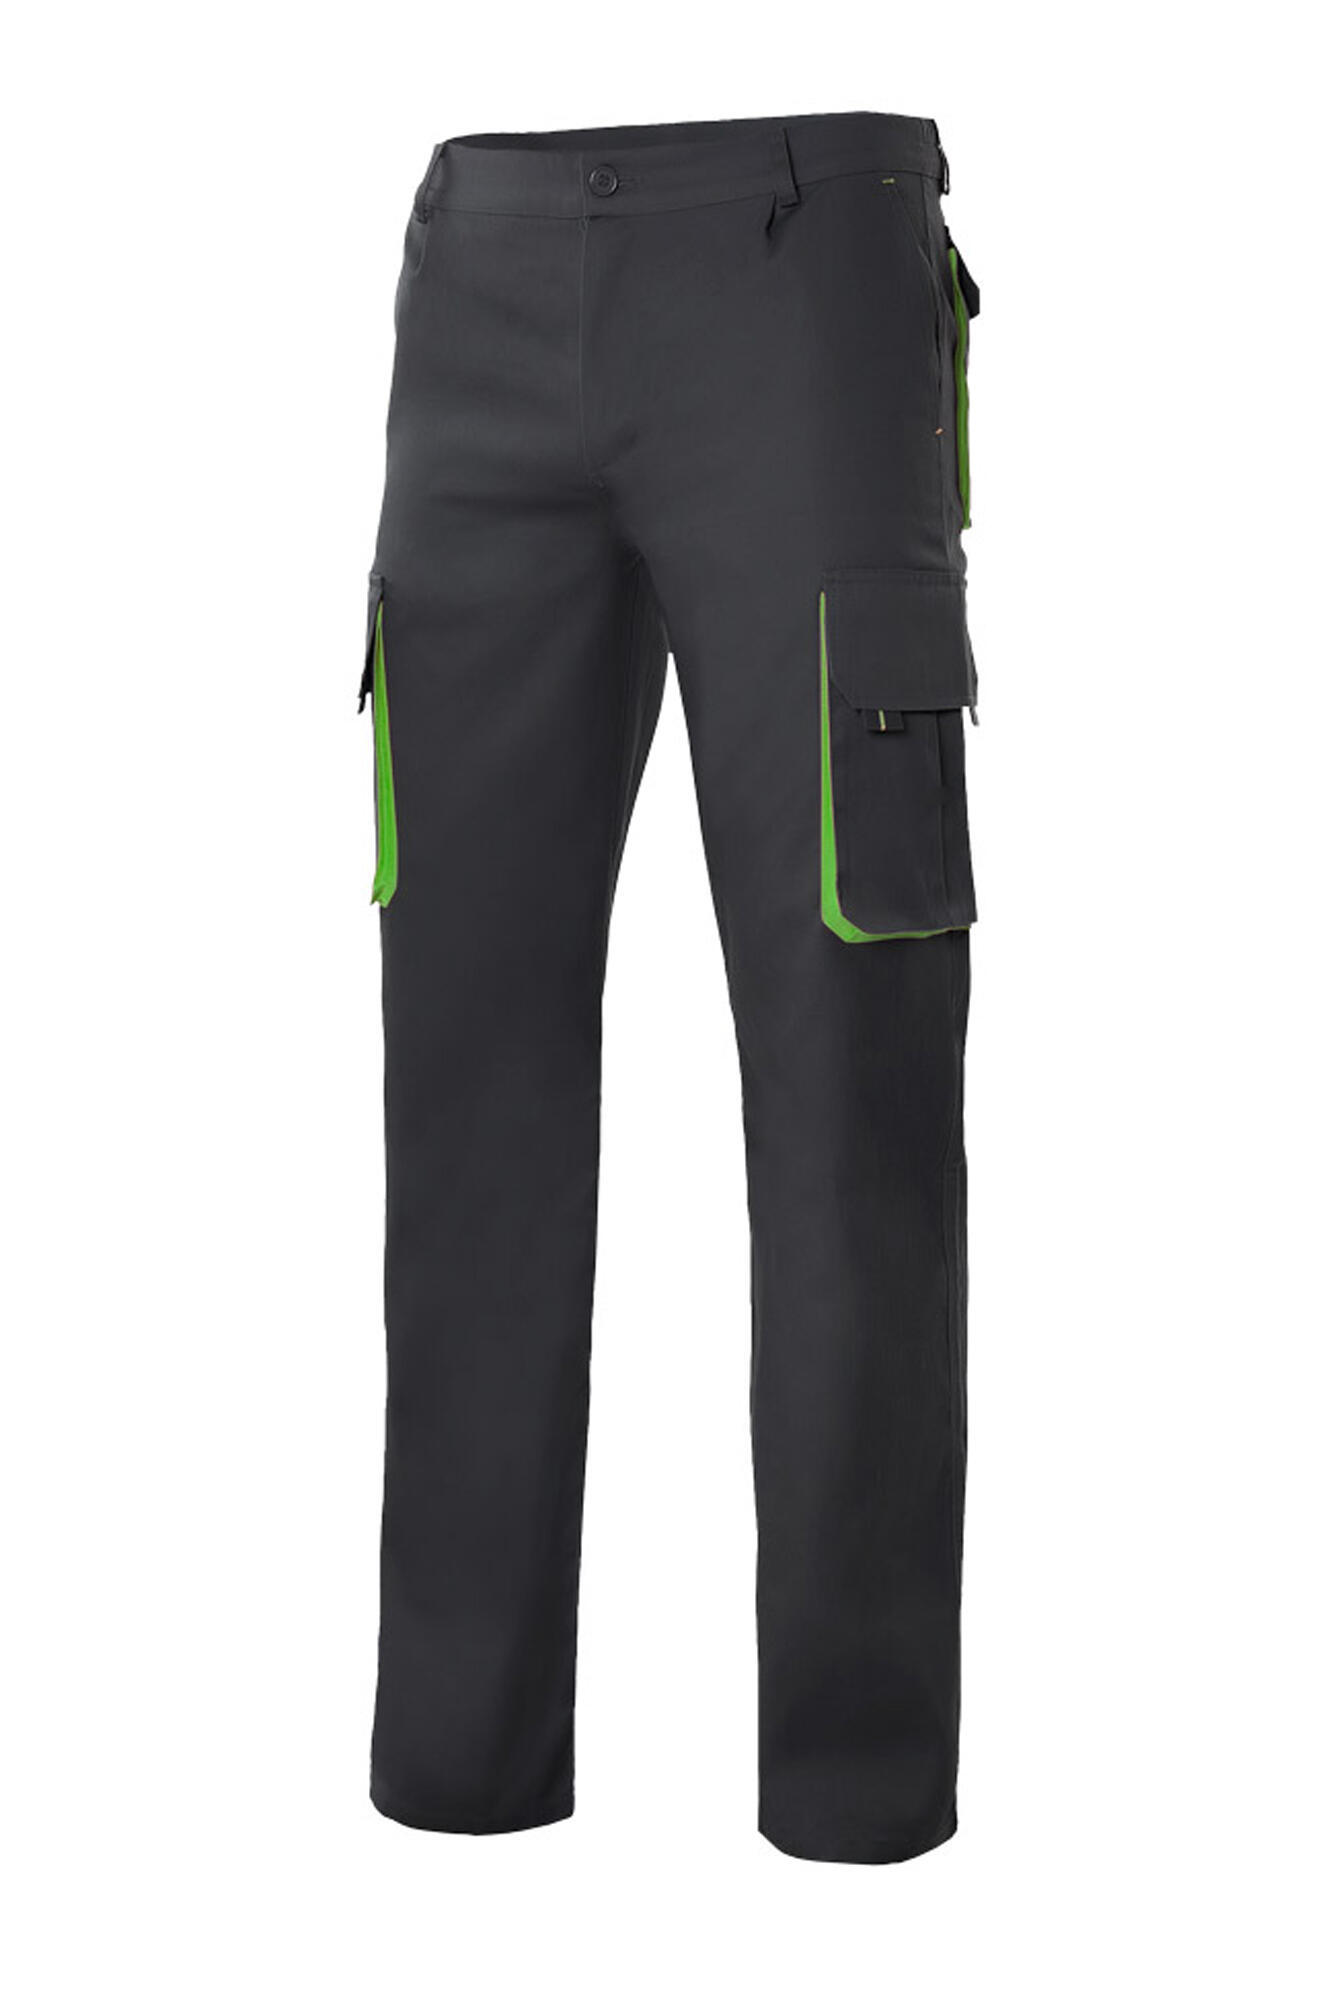 Pantalon de trabajo bicolor multibol negr/verdelima t36